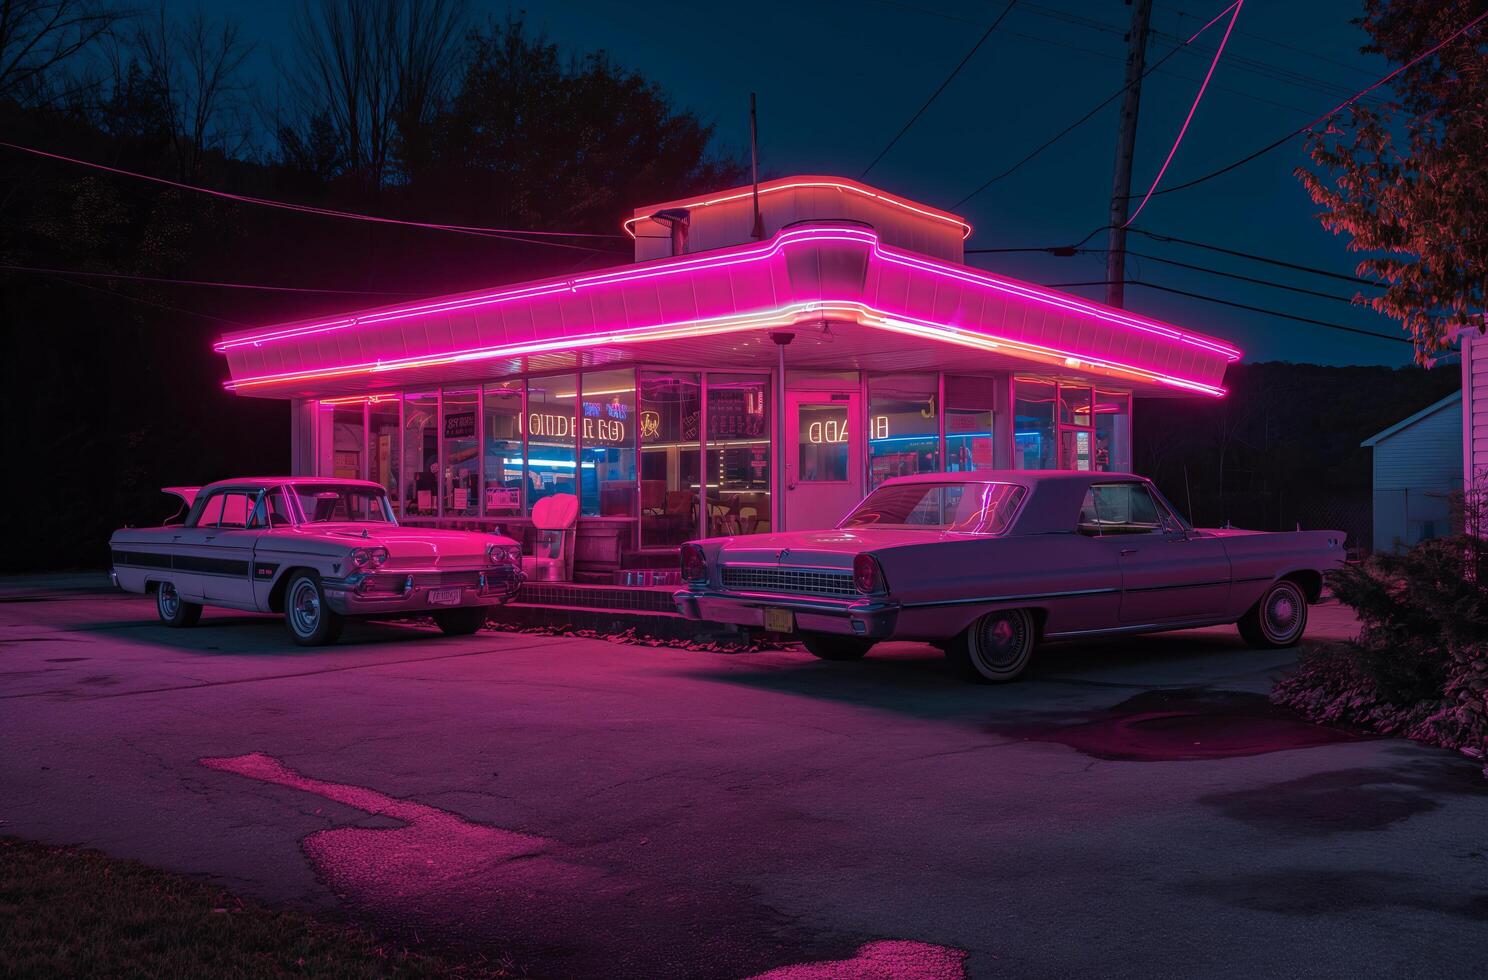 neon gloed retro diner foto